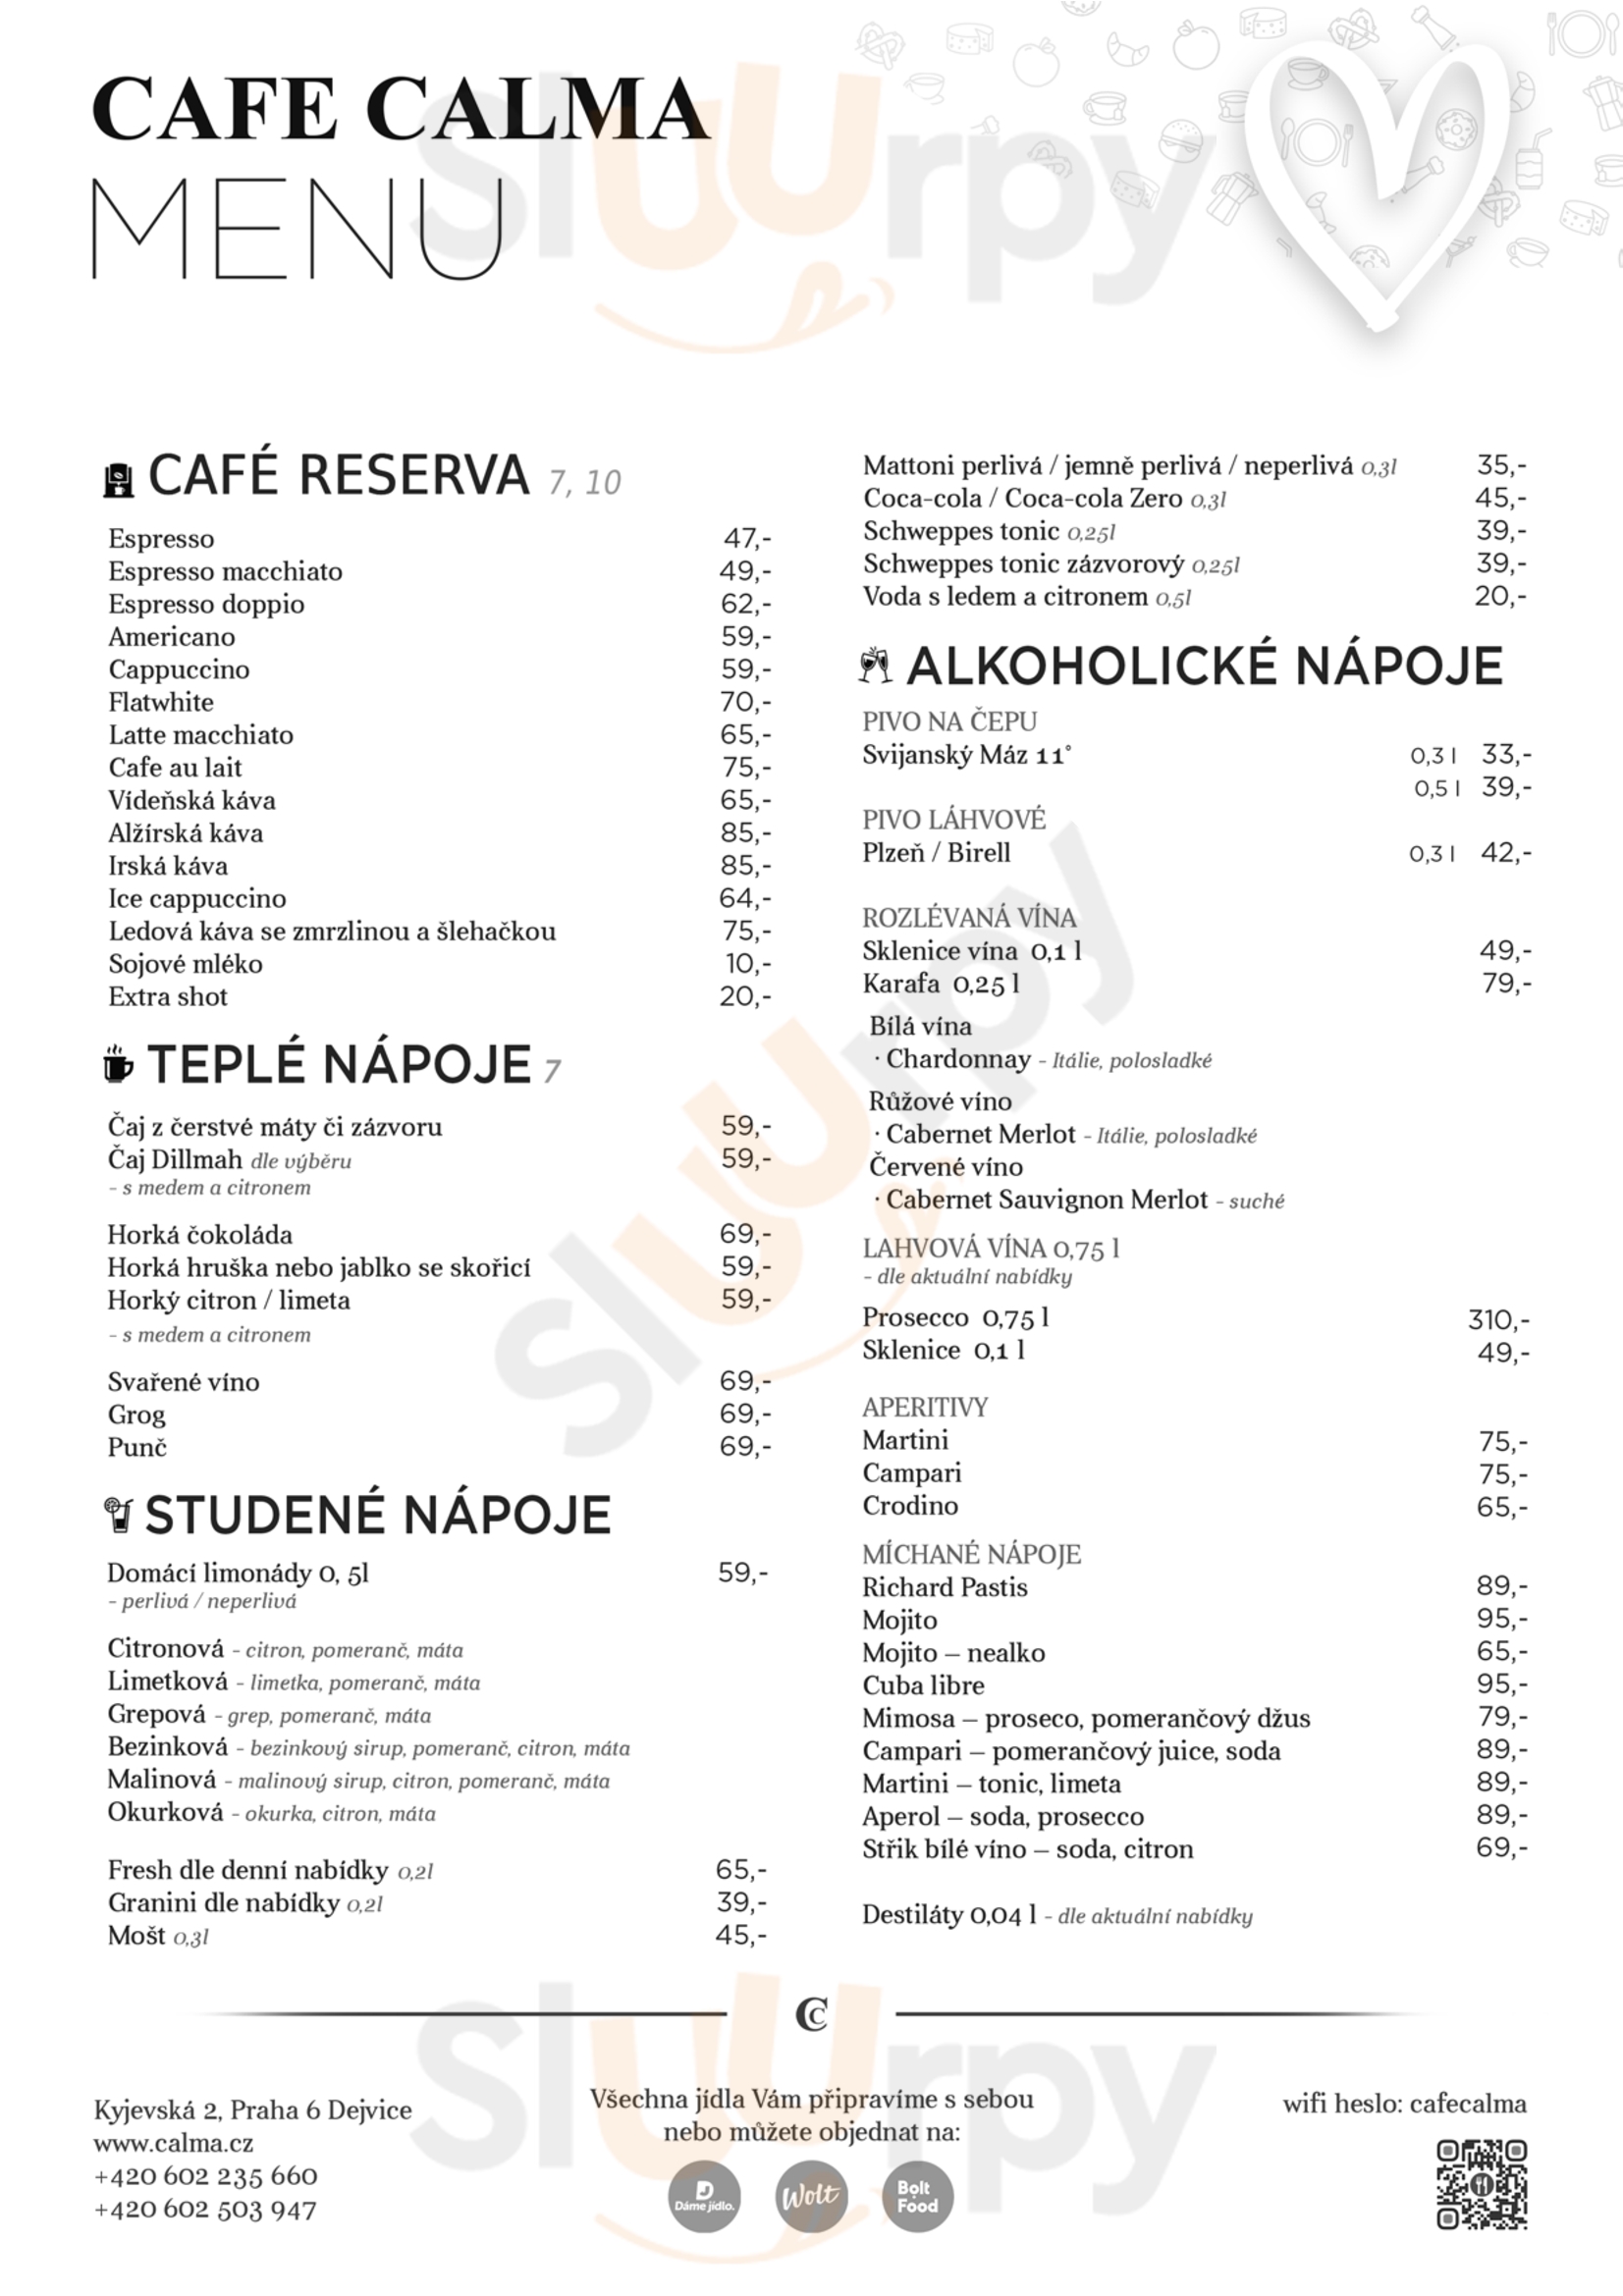 Cafe Calma Praha Menu - 1